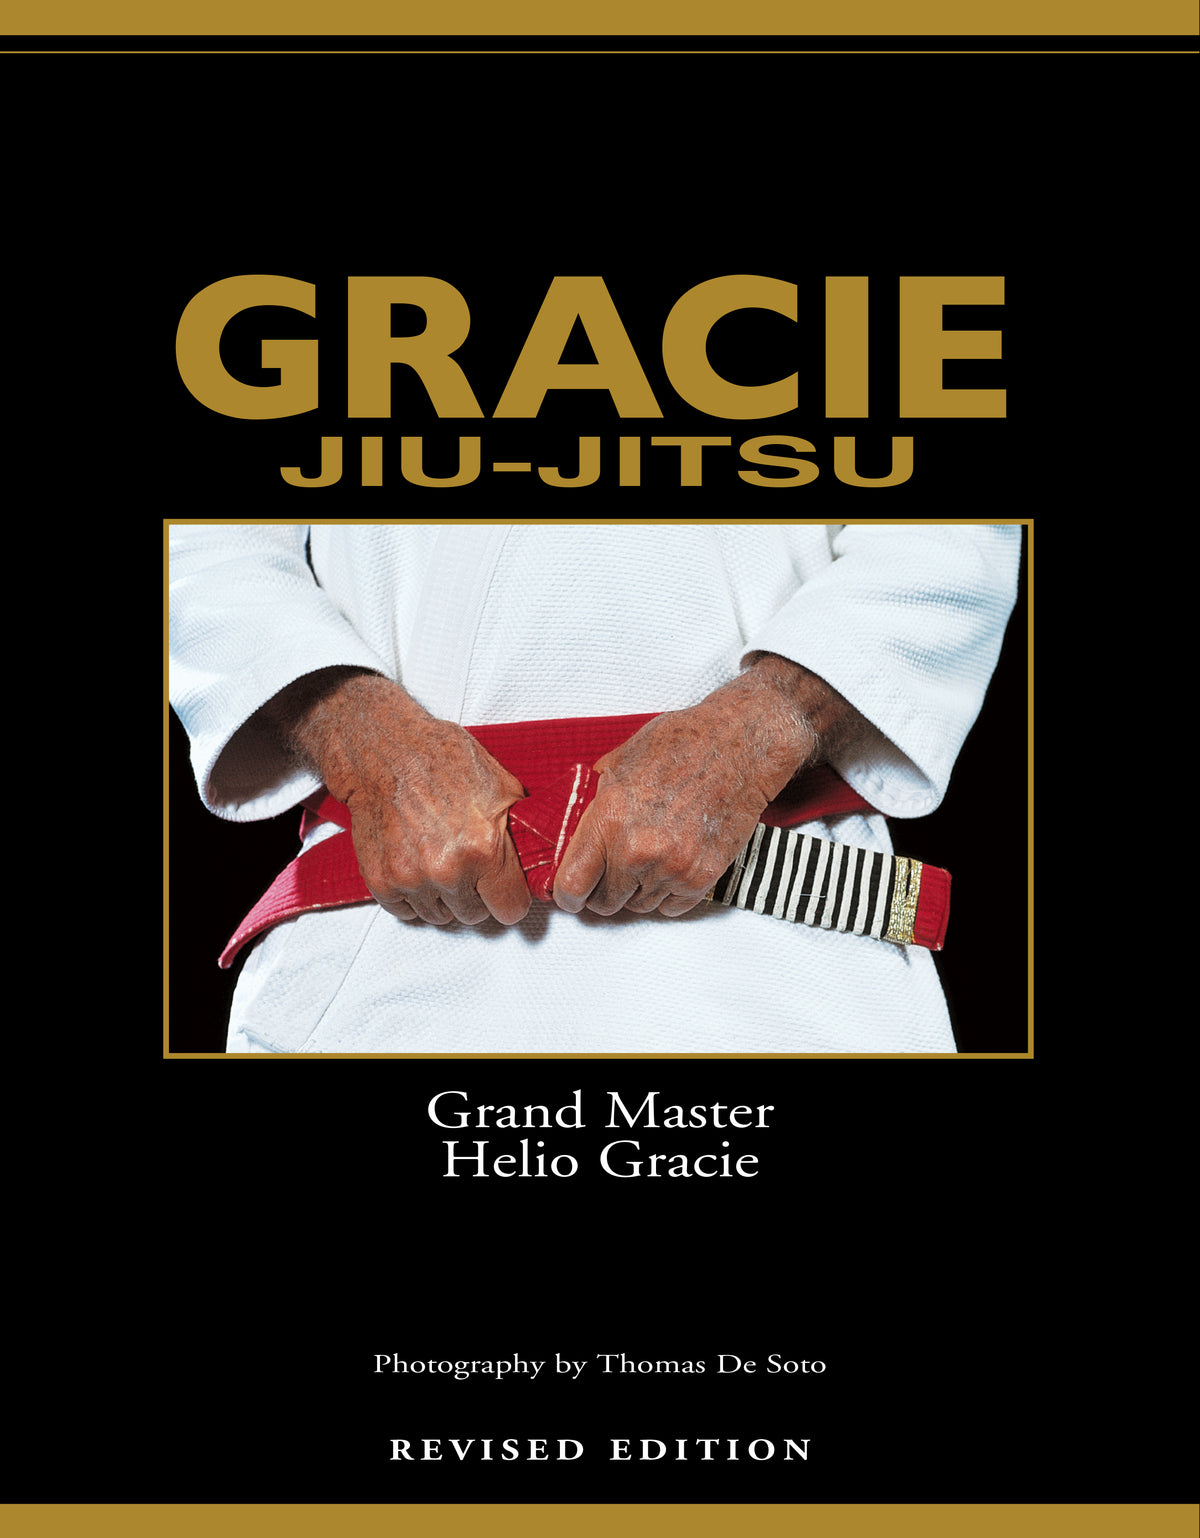 GRACIE JIU-JITSU - THE MASTER TEXT BOOK (REVISED EDITION) BY HELIO GRACIE